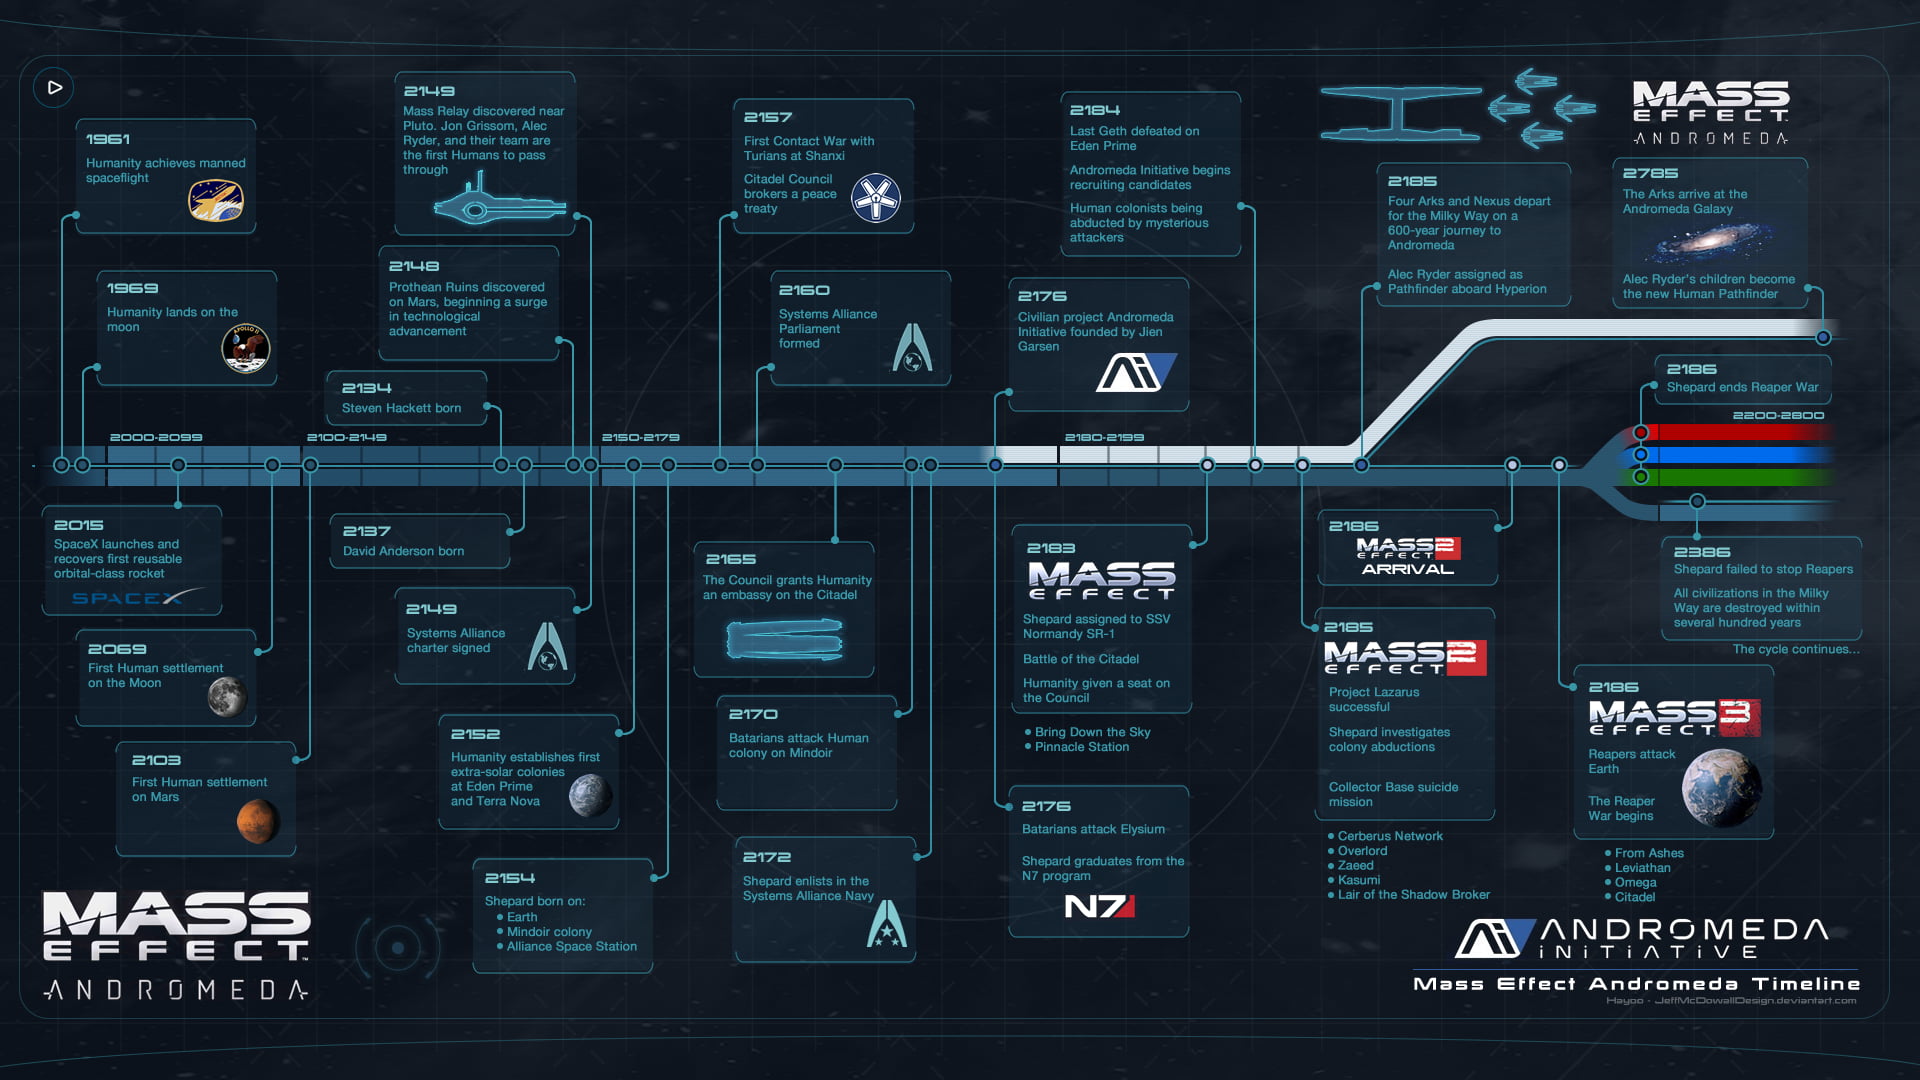 Mass Effect screenshot, Mass Effect: Andromeda, Andromeda Initiative